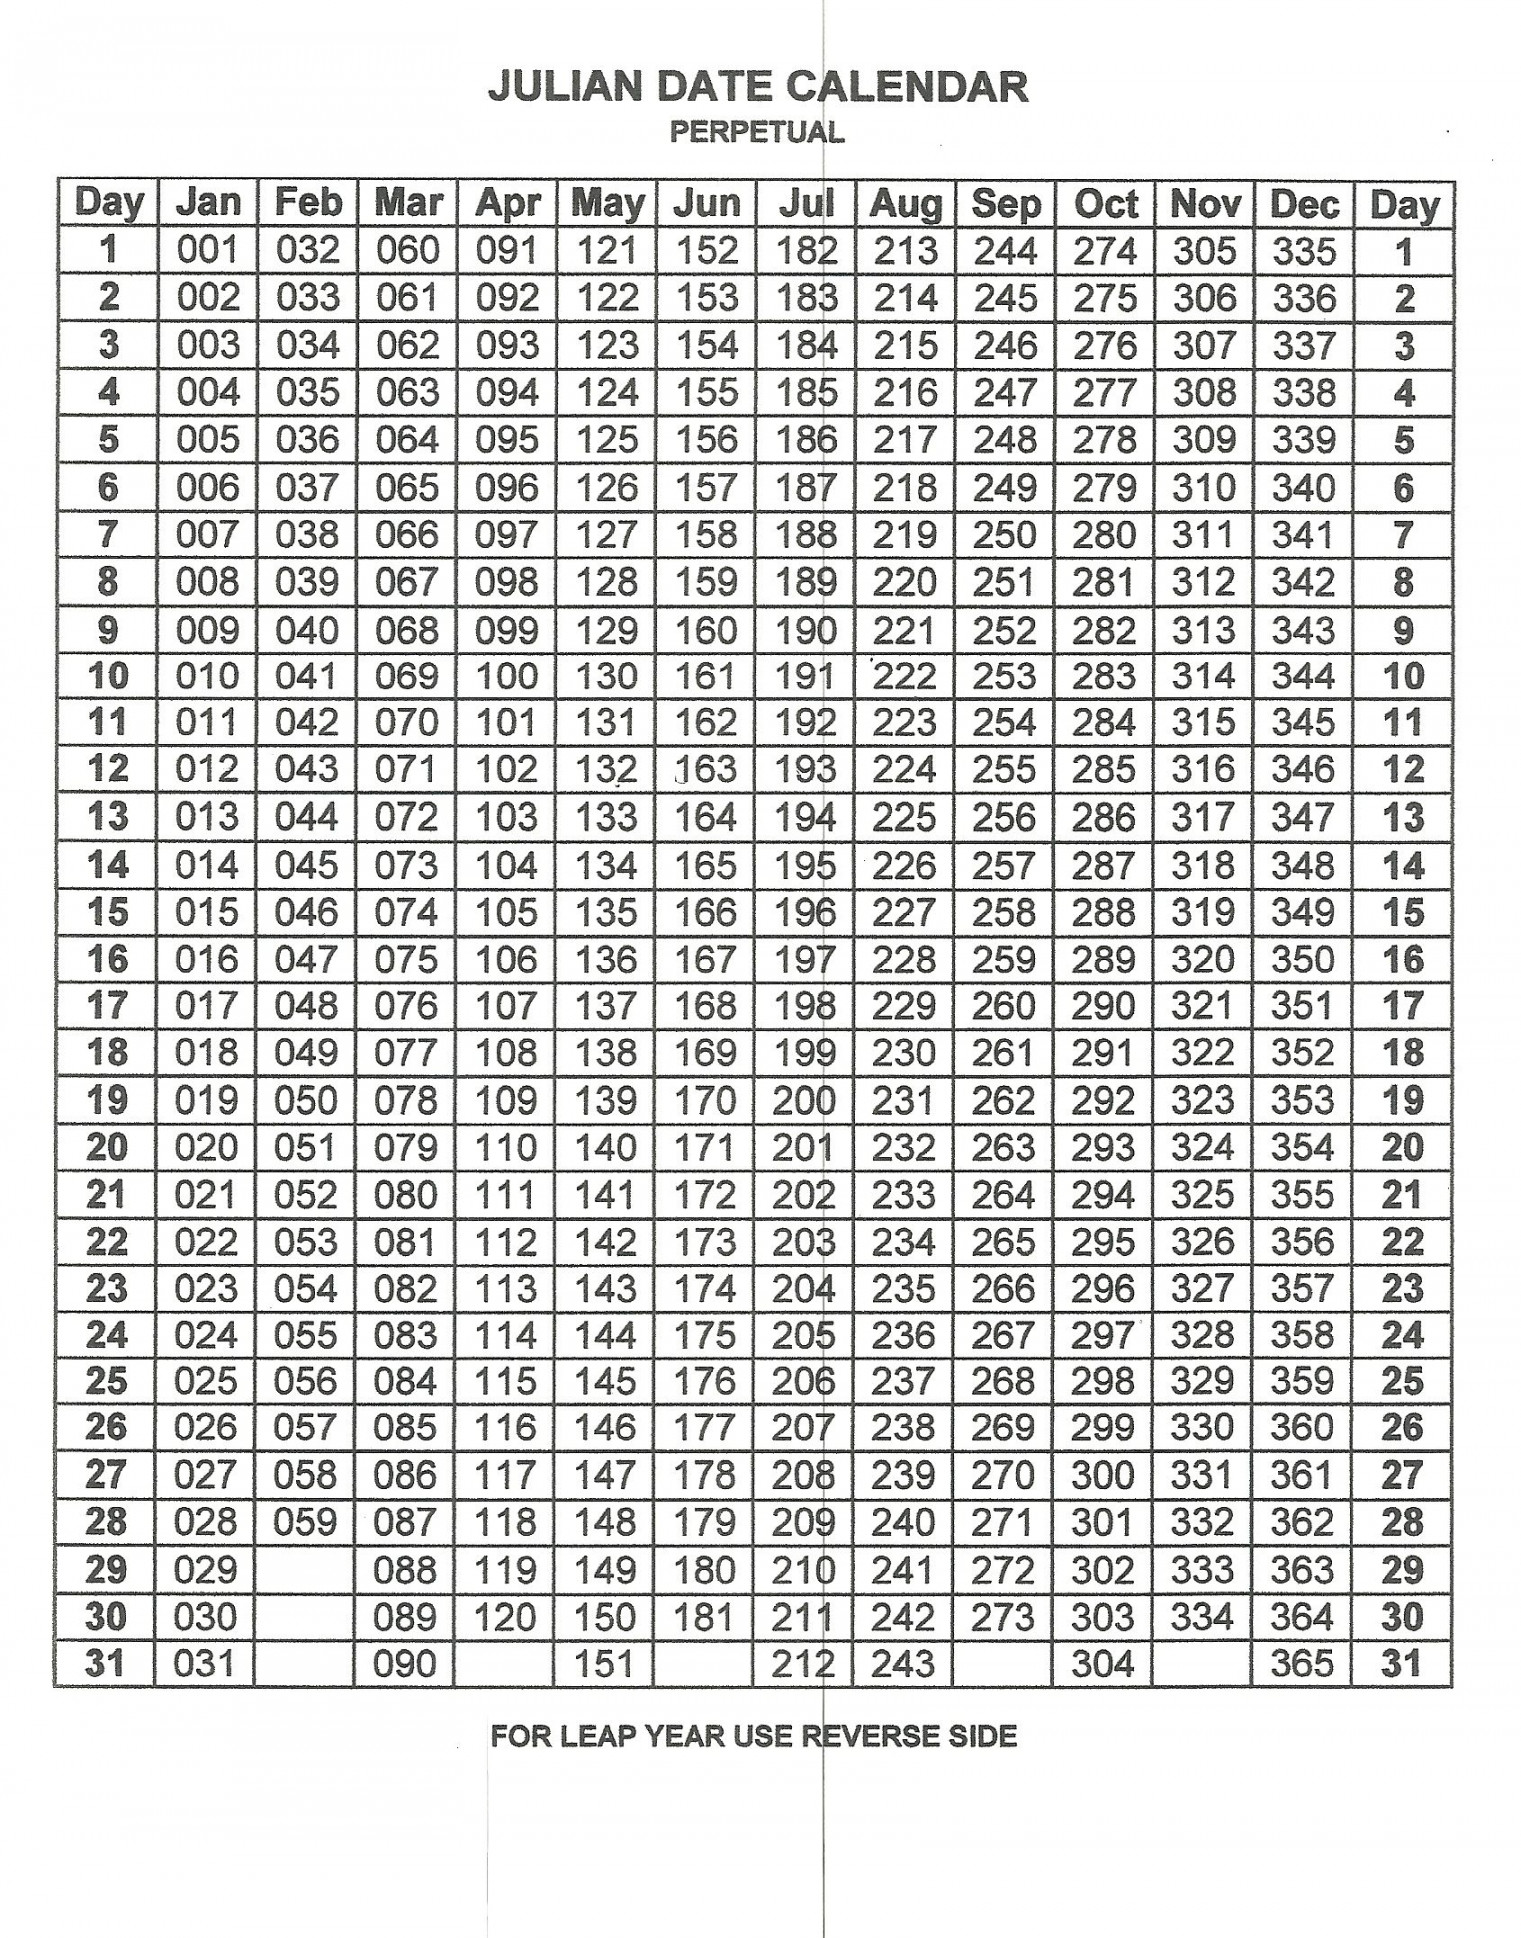 Perpetual Julian Date Calendar  Calendario, Fechas